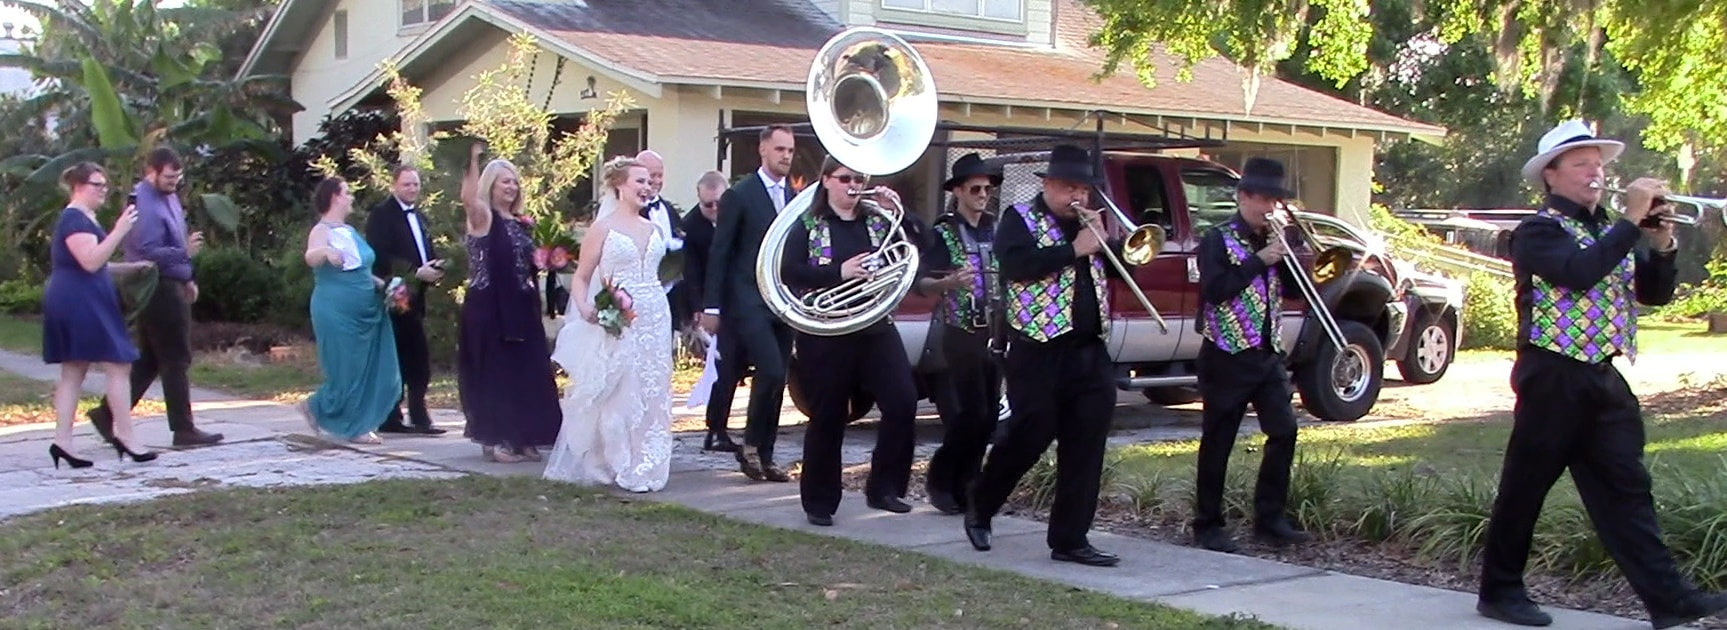 Second Line Brass Band, Wedding, Orlando, Brass Band, Real Deal Brass Band